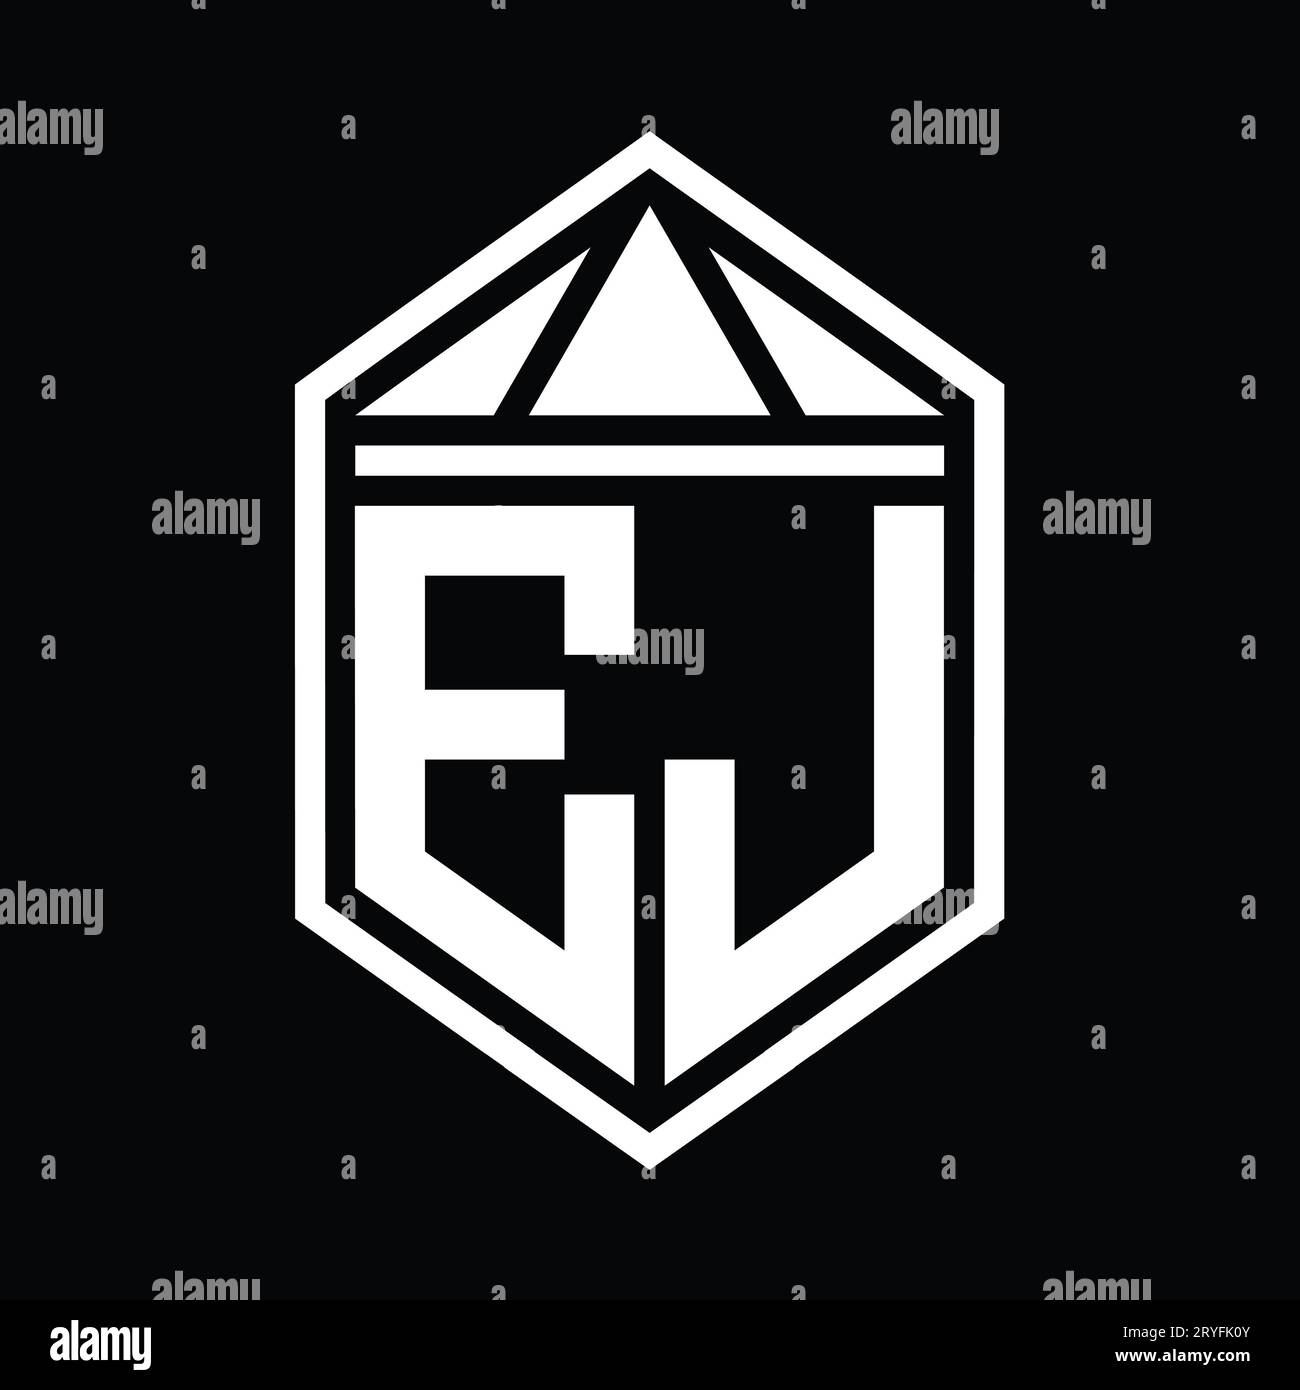 Letter Logo Monogram Hexagon Shape Crown Castle Geometric Style Design  Stock Photo by ©priyo181290@gmail.com 670730076